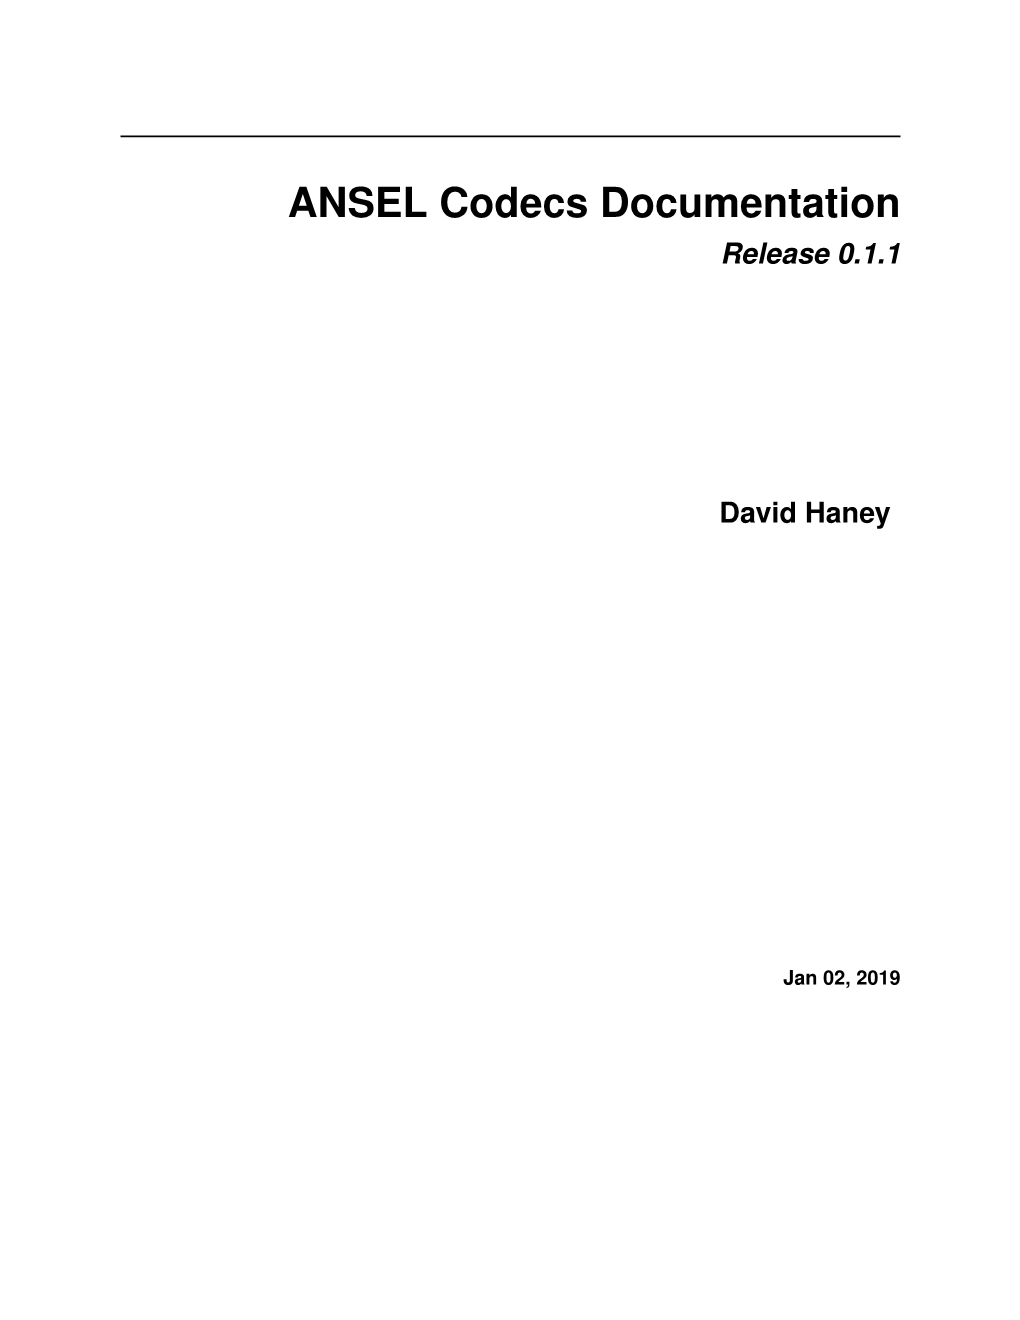 ANSEL Codecs Documentation Release 0.1.1